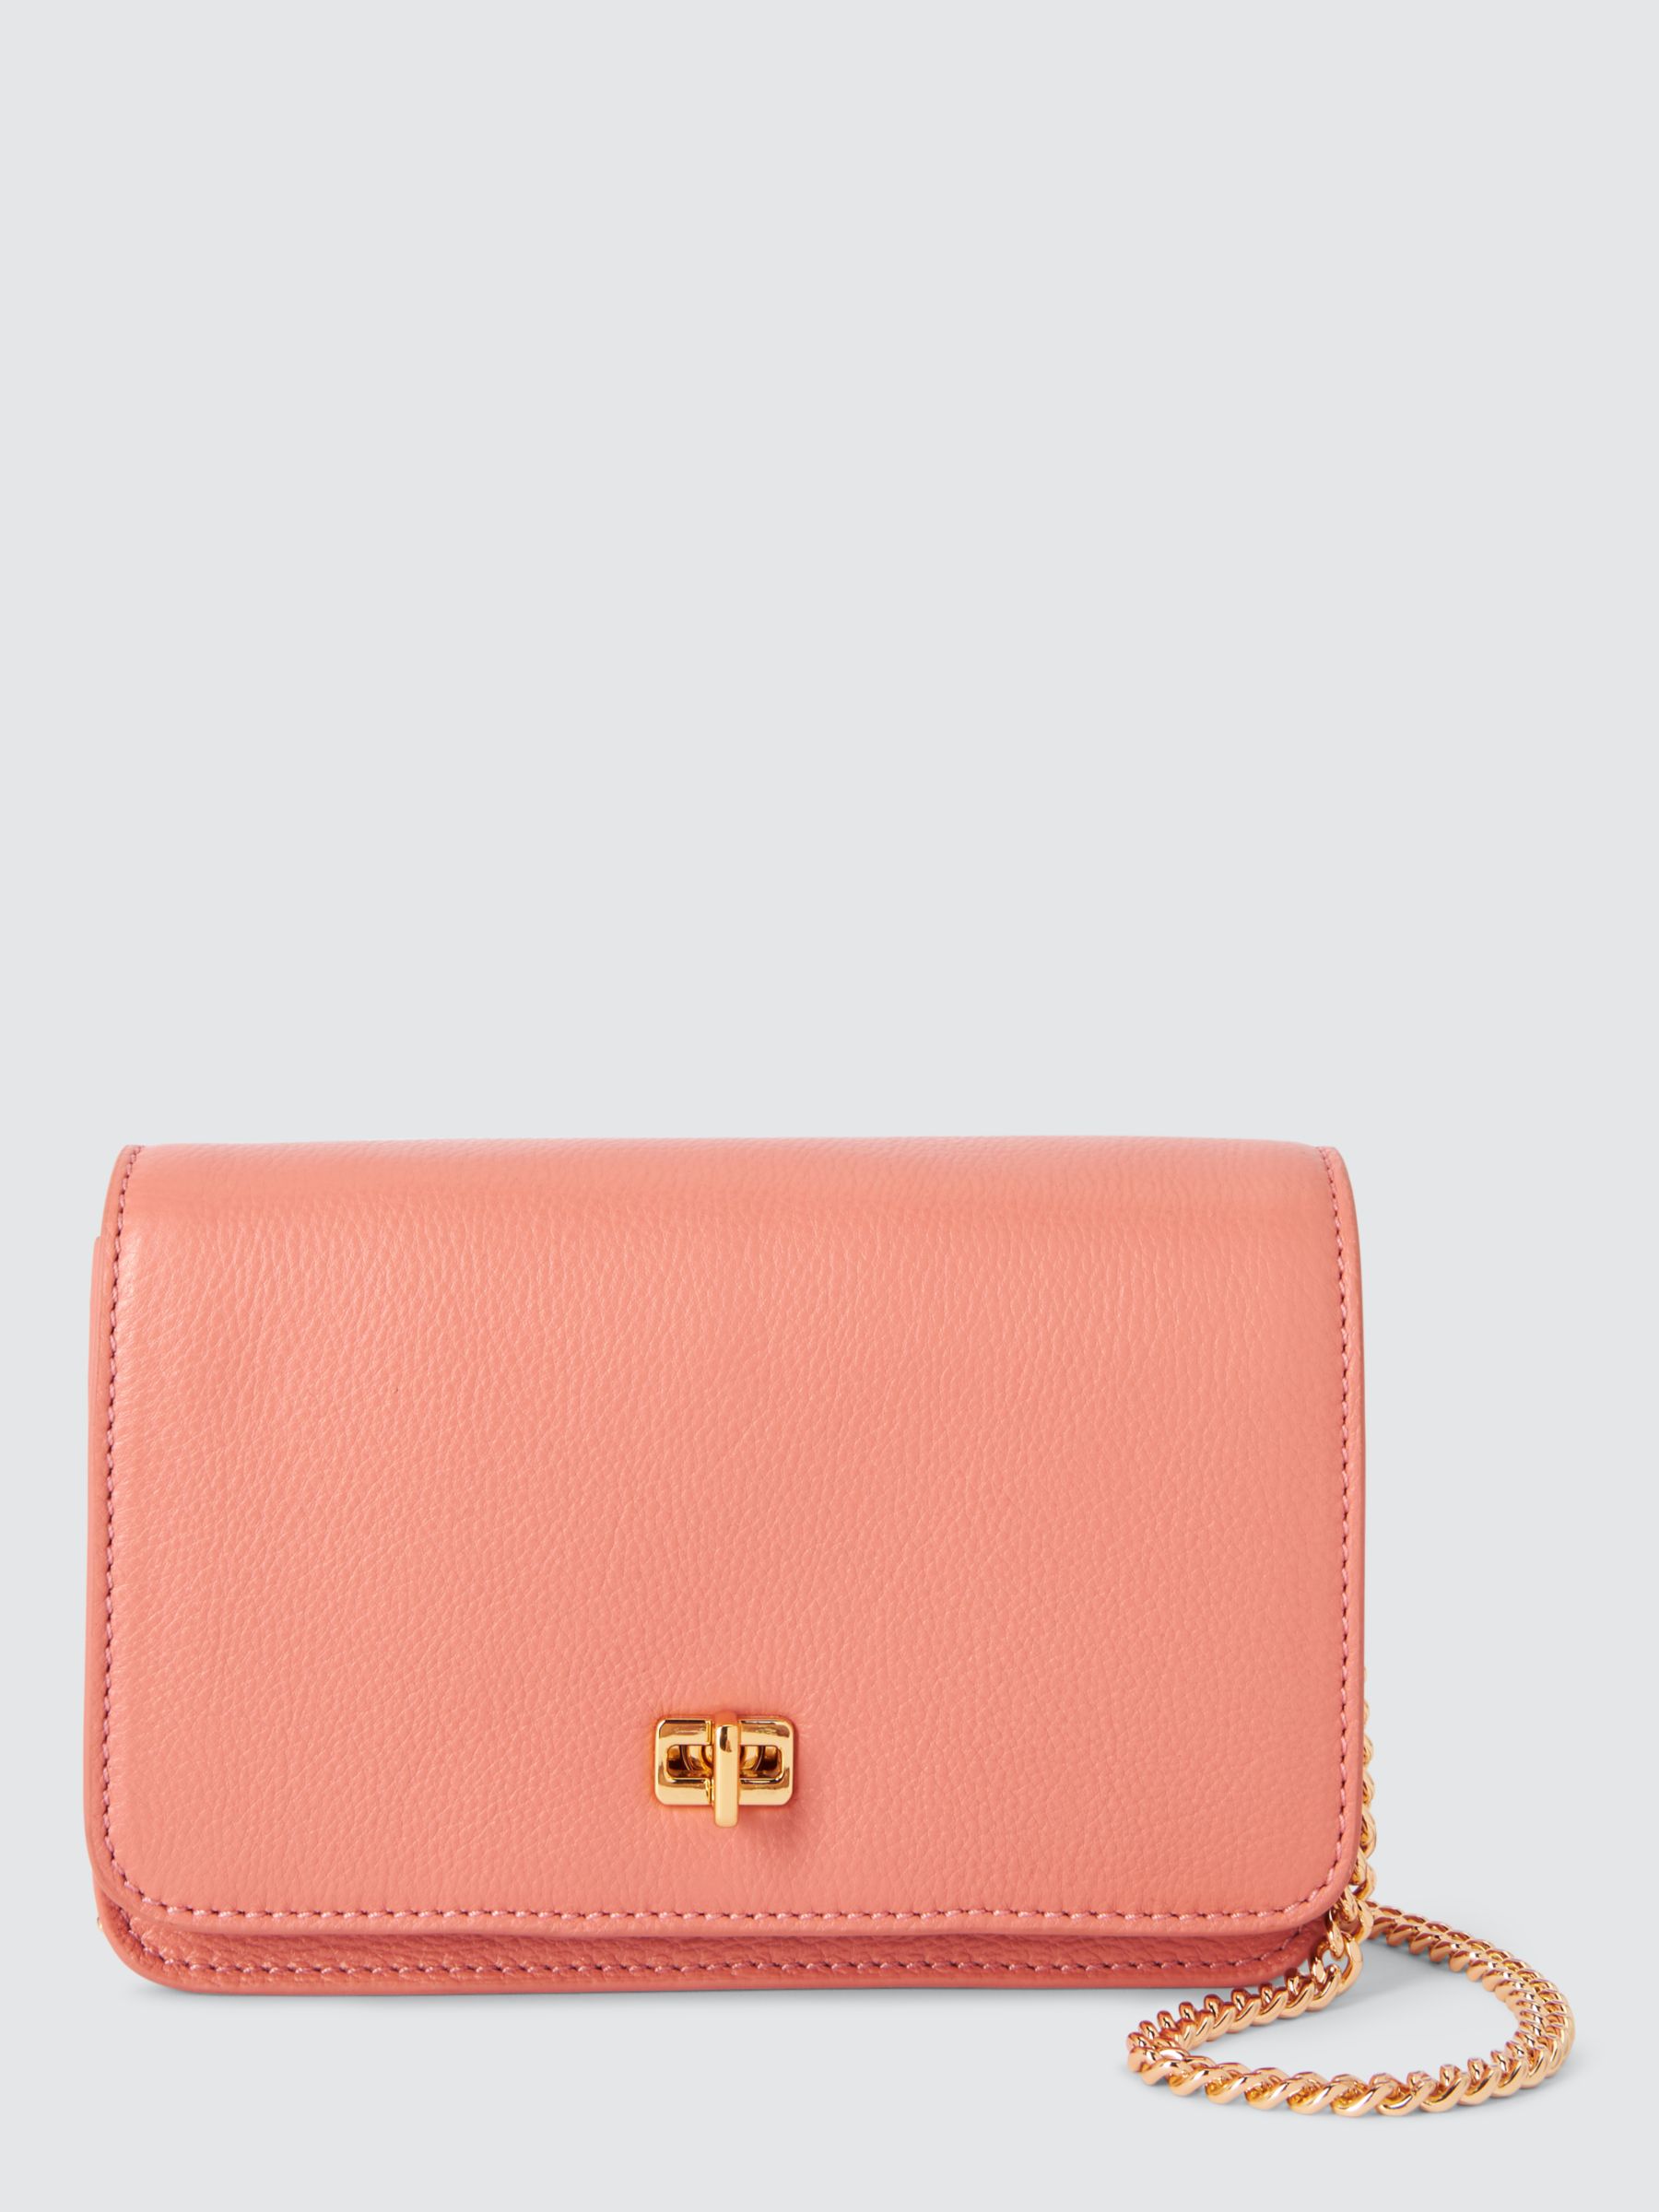 John Lewis Mini Chain Flapover Handbag, Pink at John Lewis & Partners